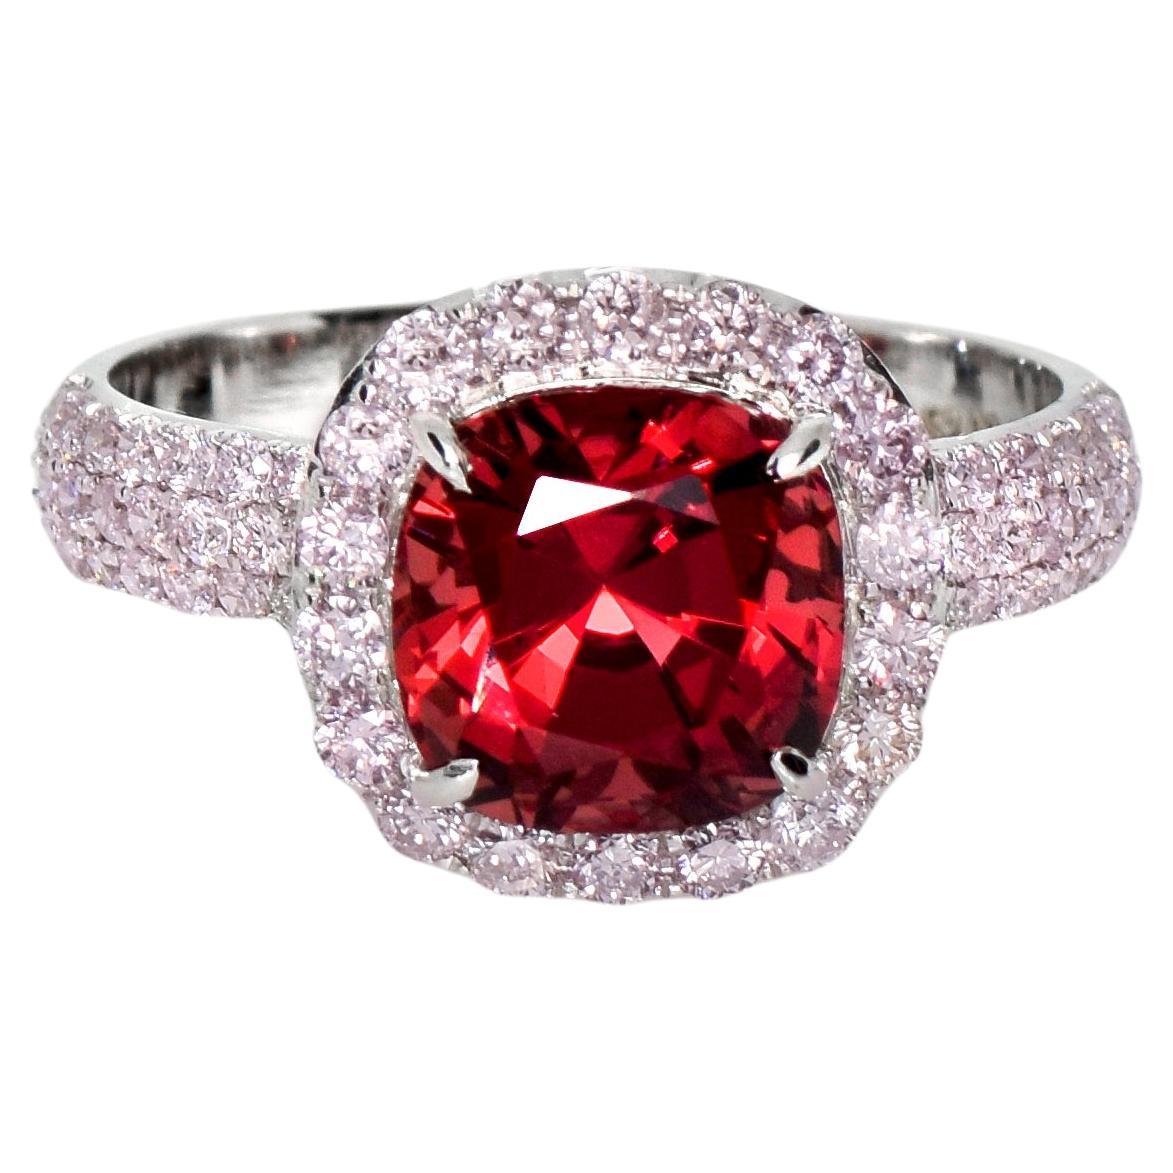 IGI 18K 3.09 Ct Red Spinel&Pink Diamonds Antique Engagement Ring